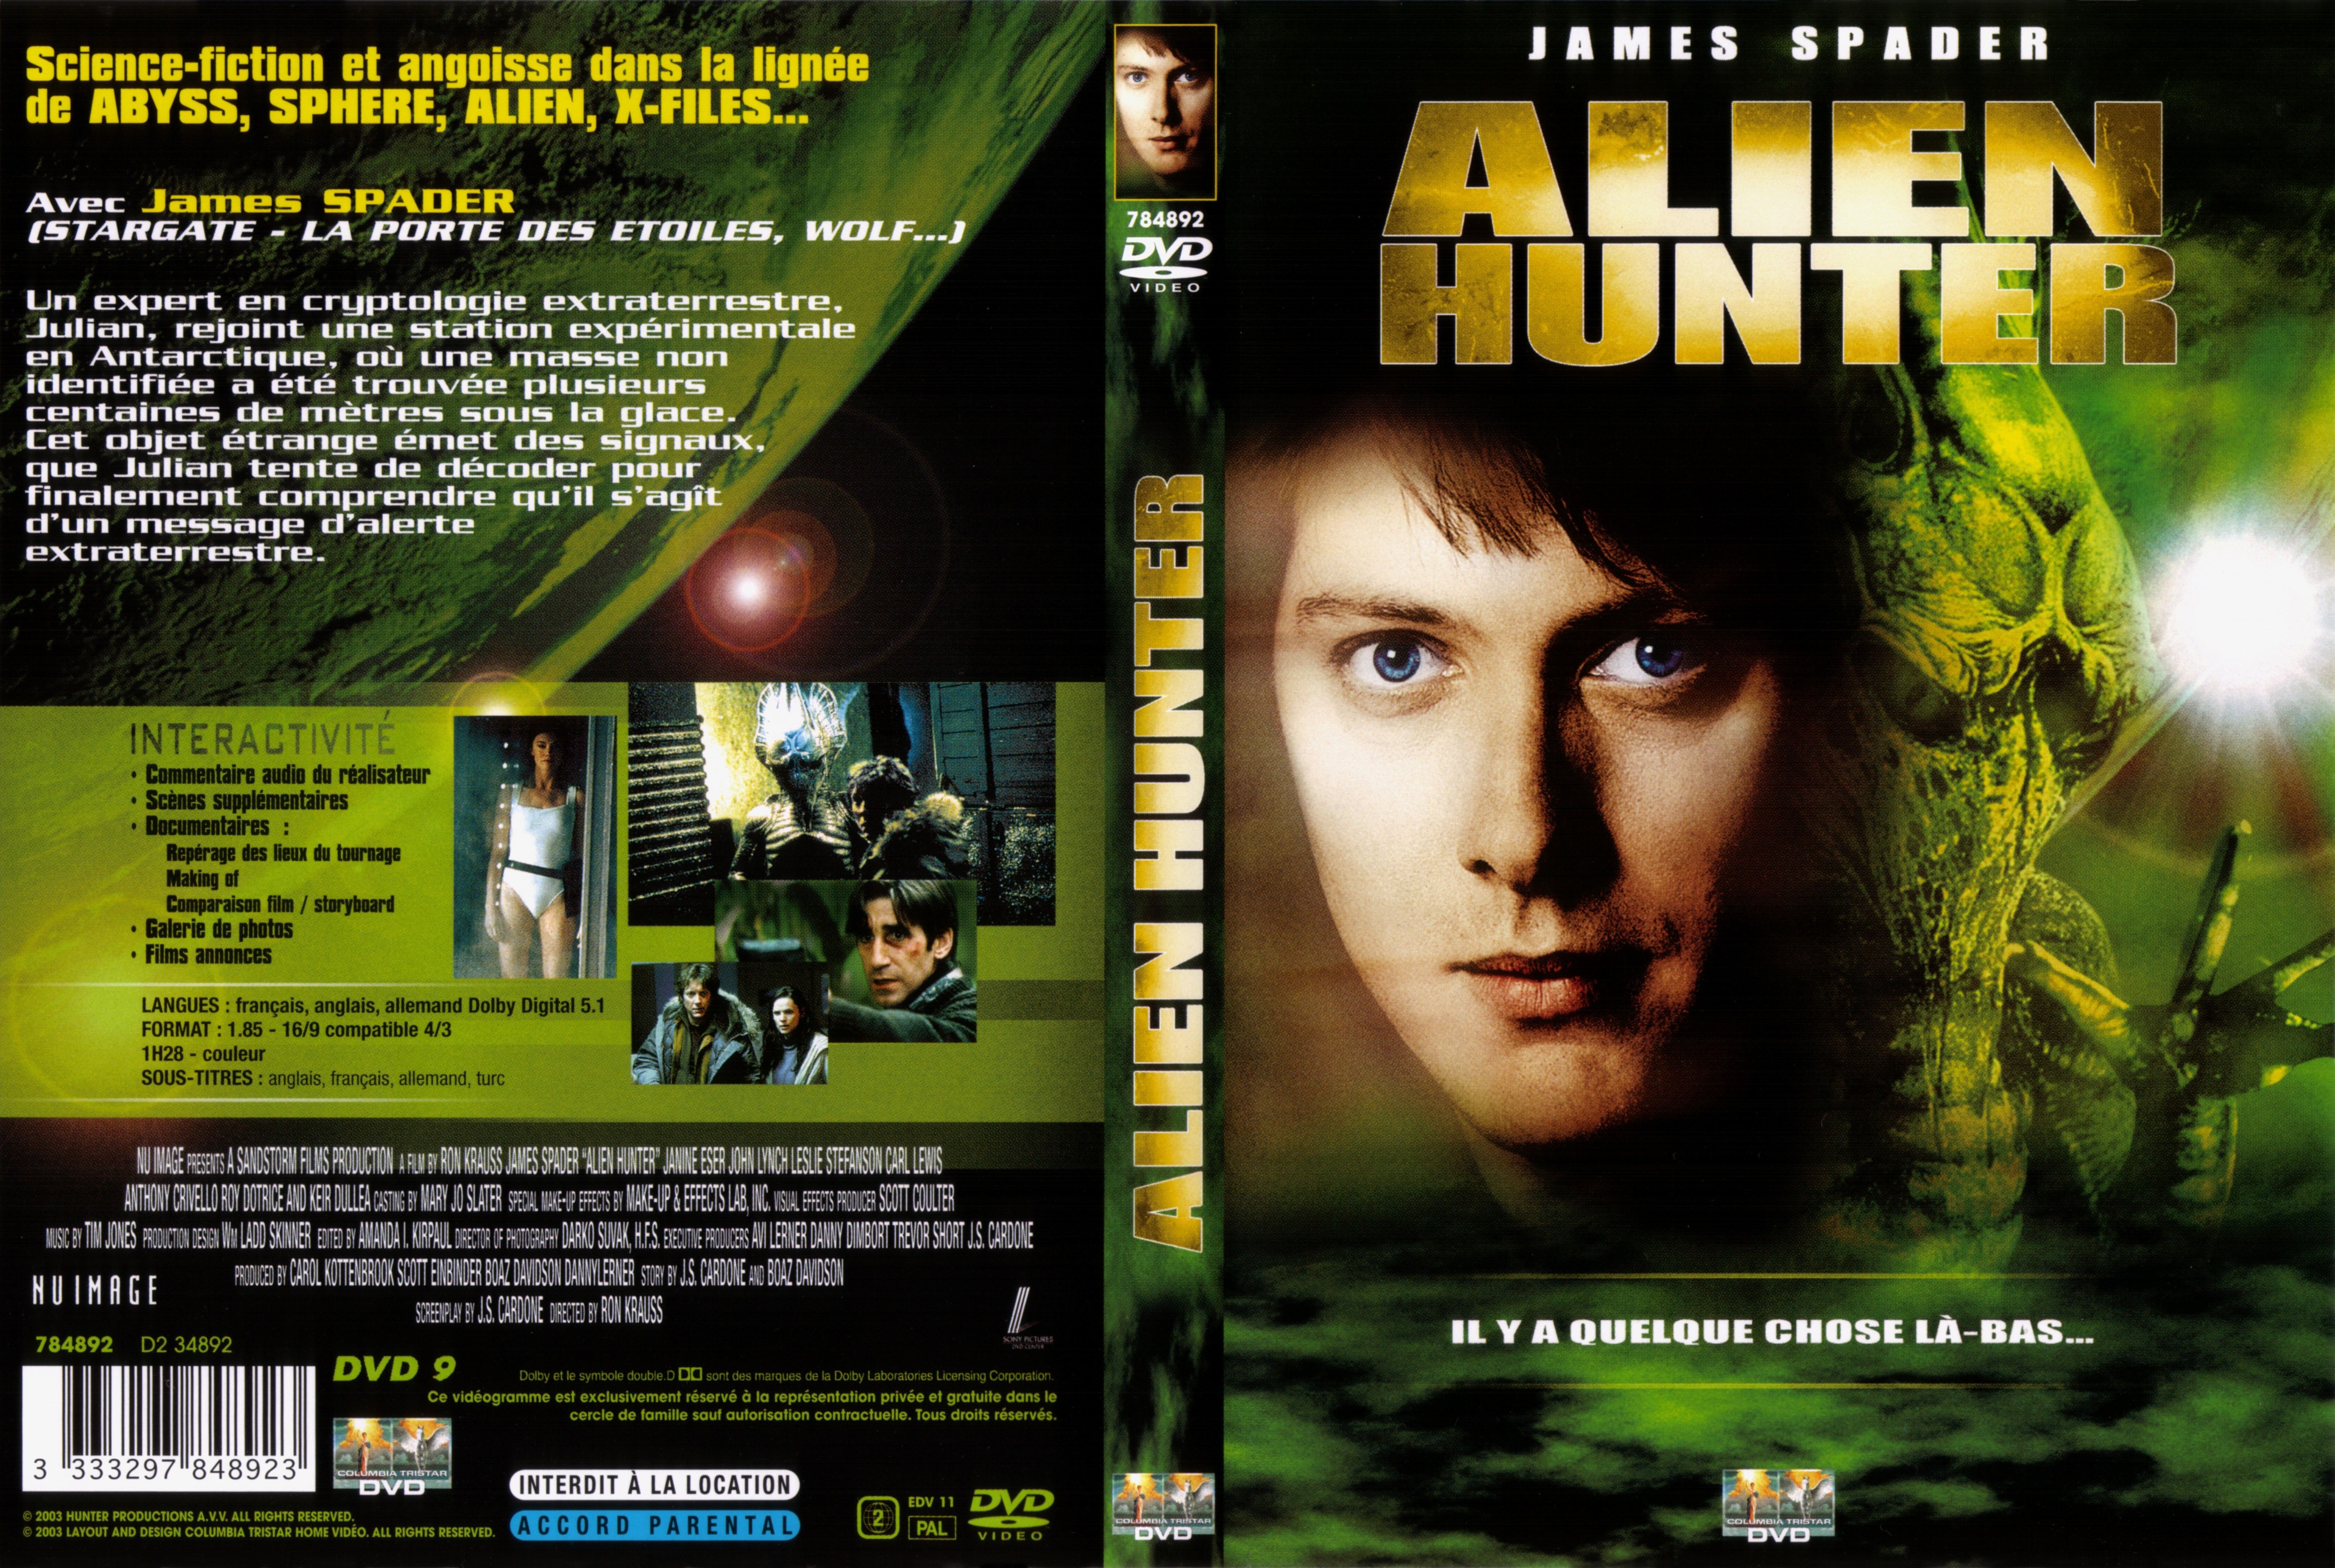 Jaquette DVD Alien hunter